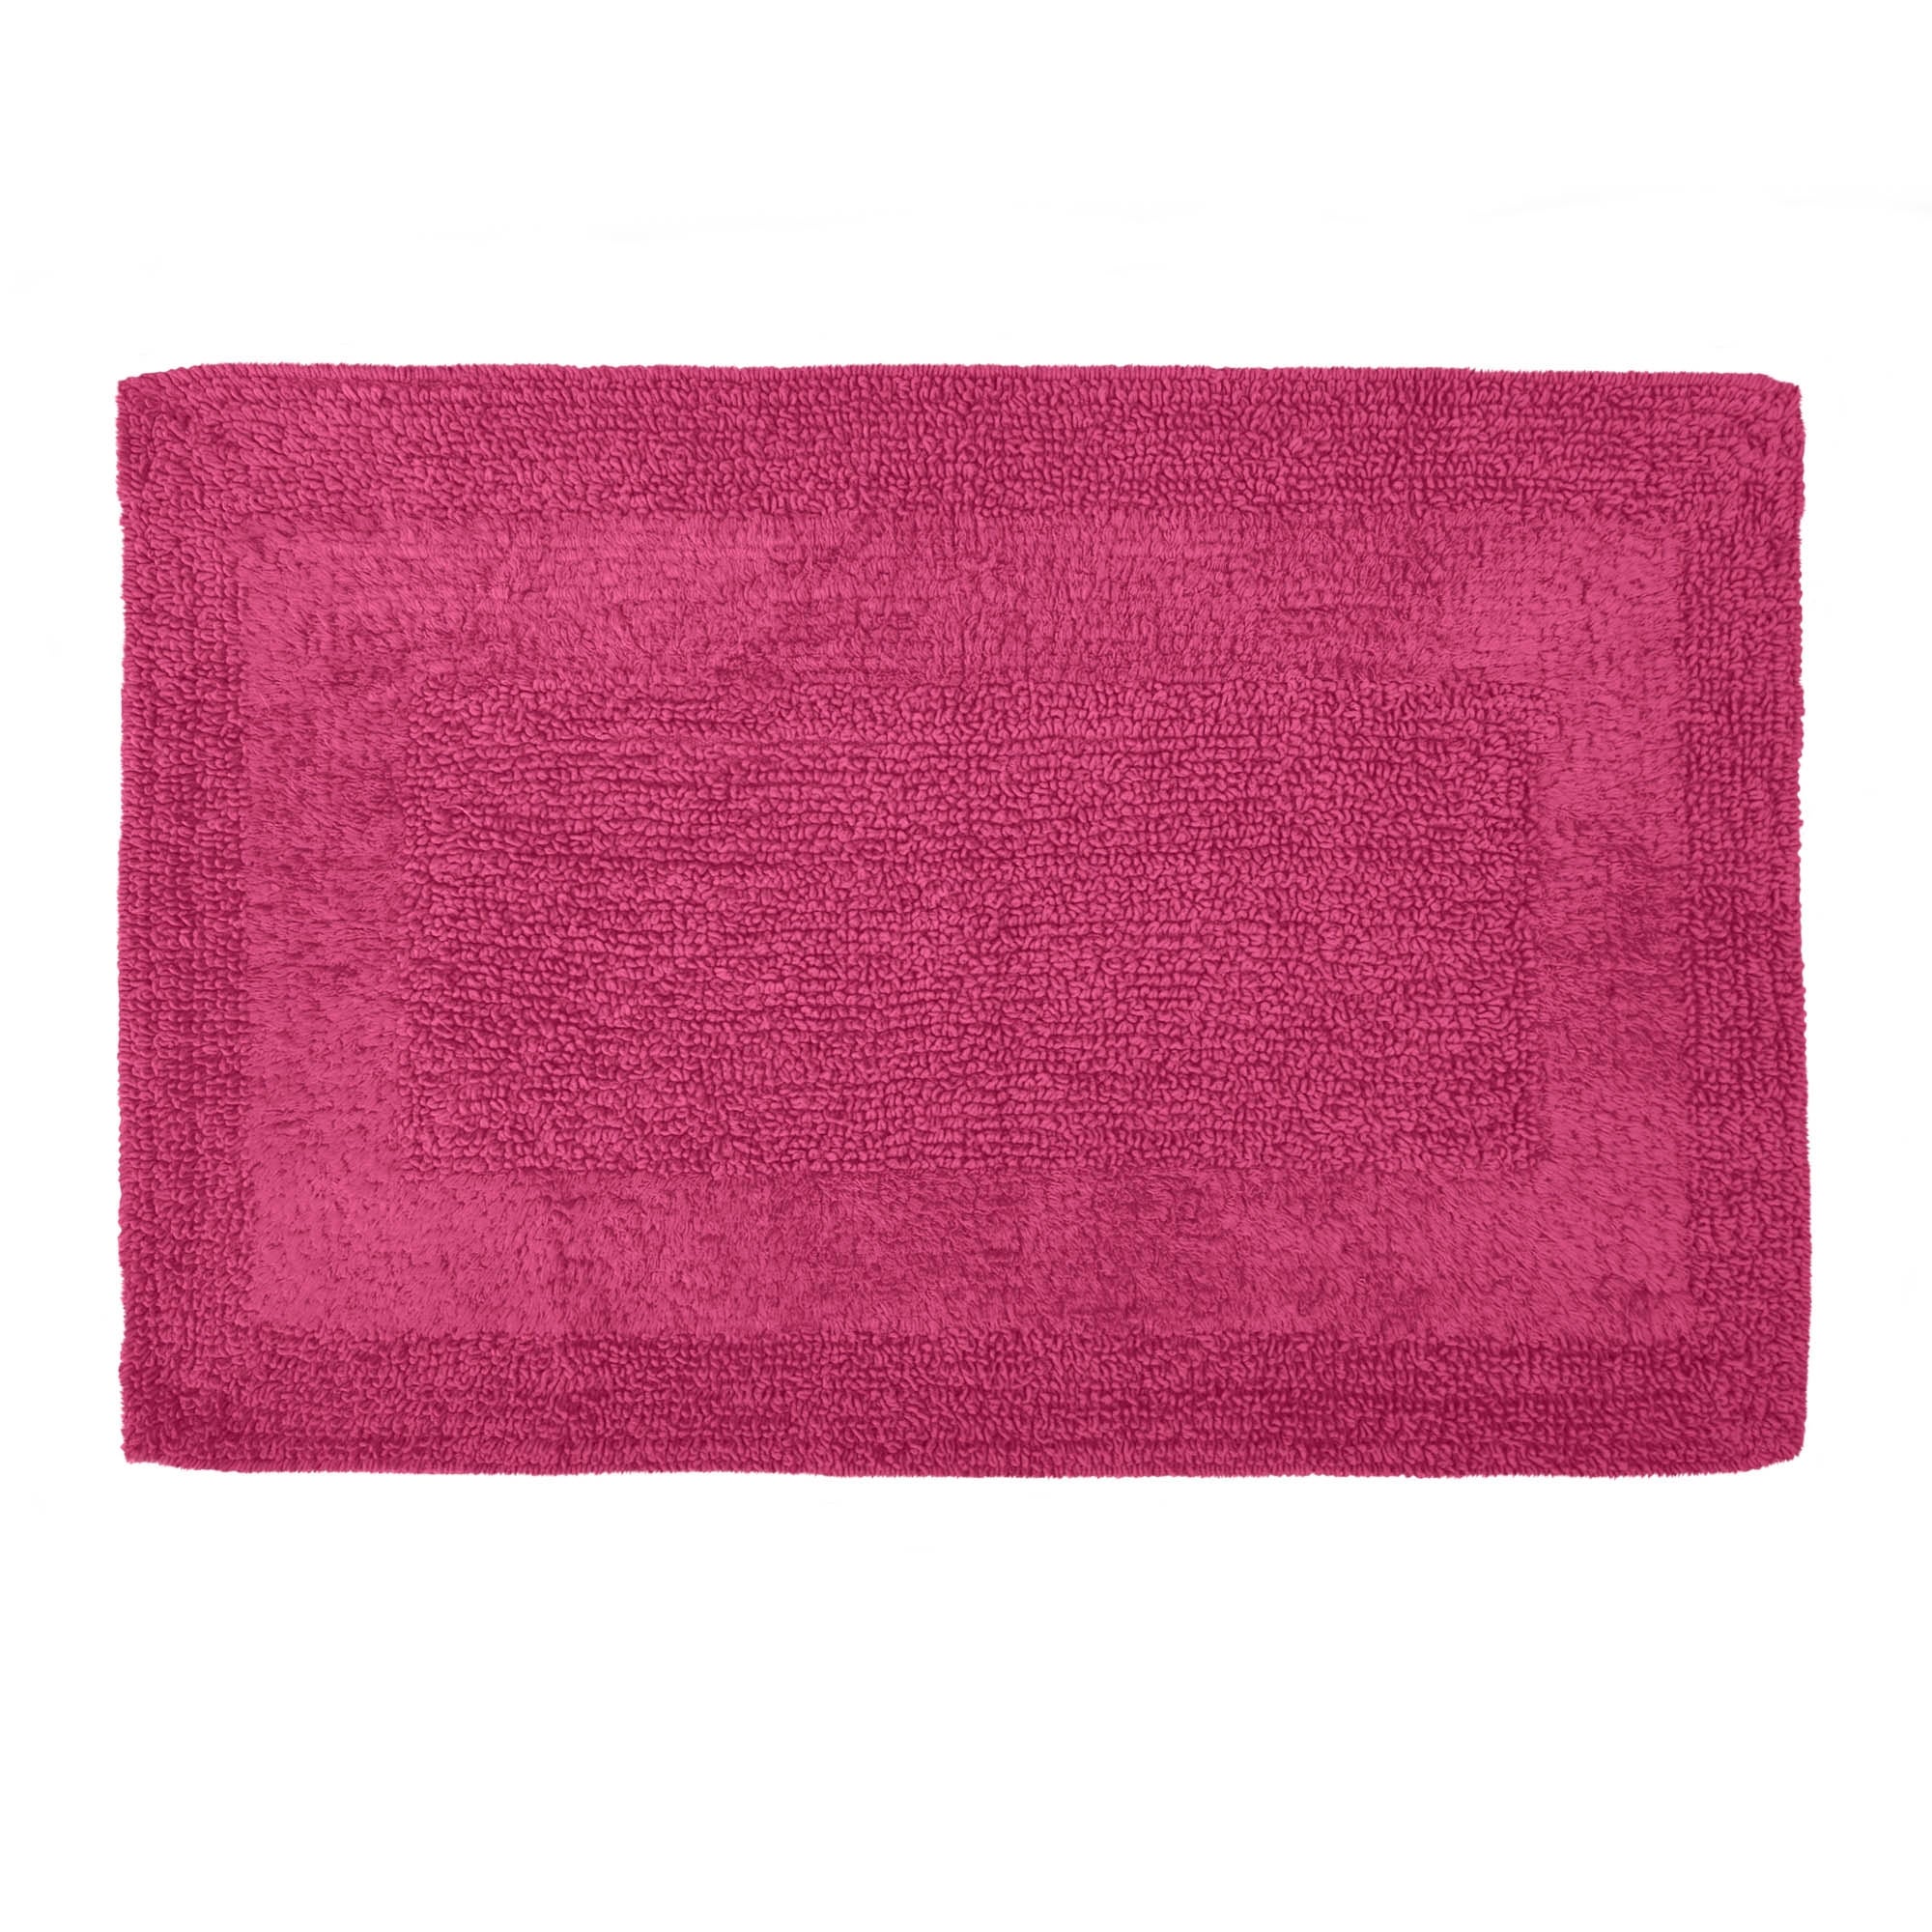 Super Soft Reversible Fuchsia Bath Mat Pink